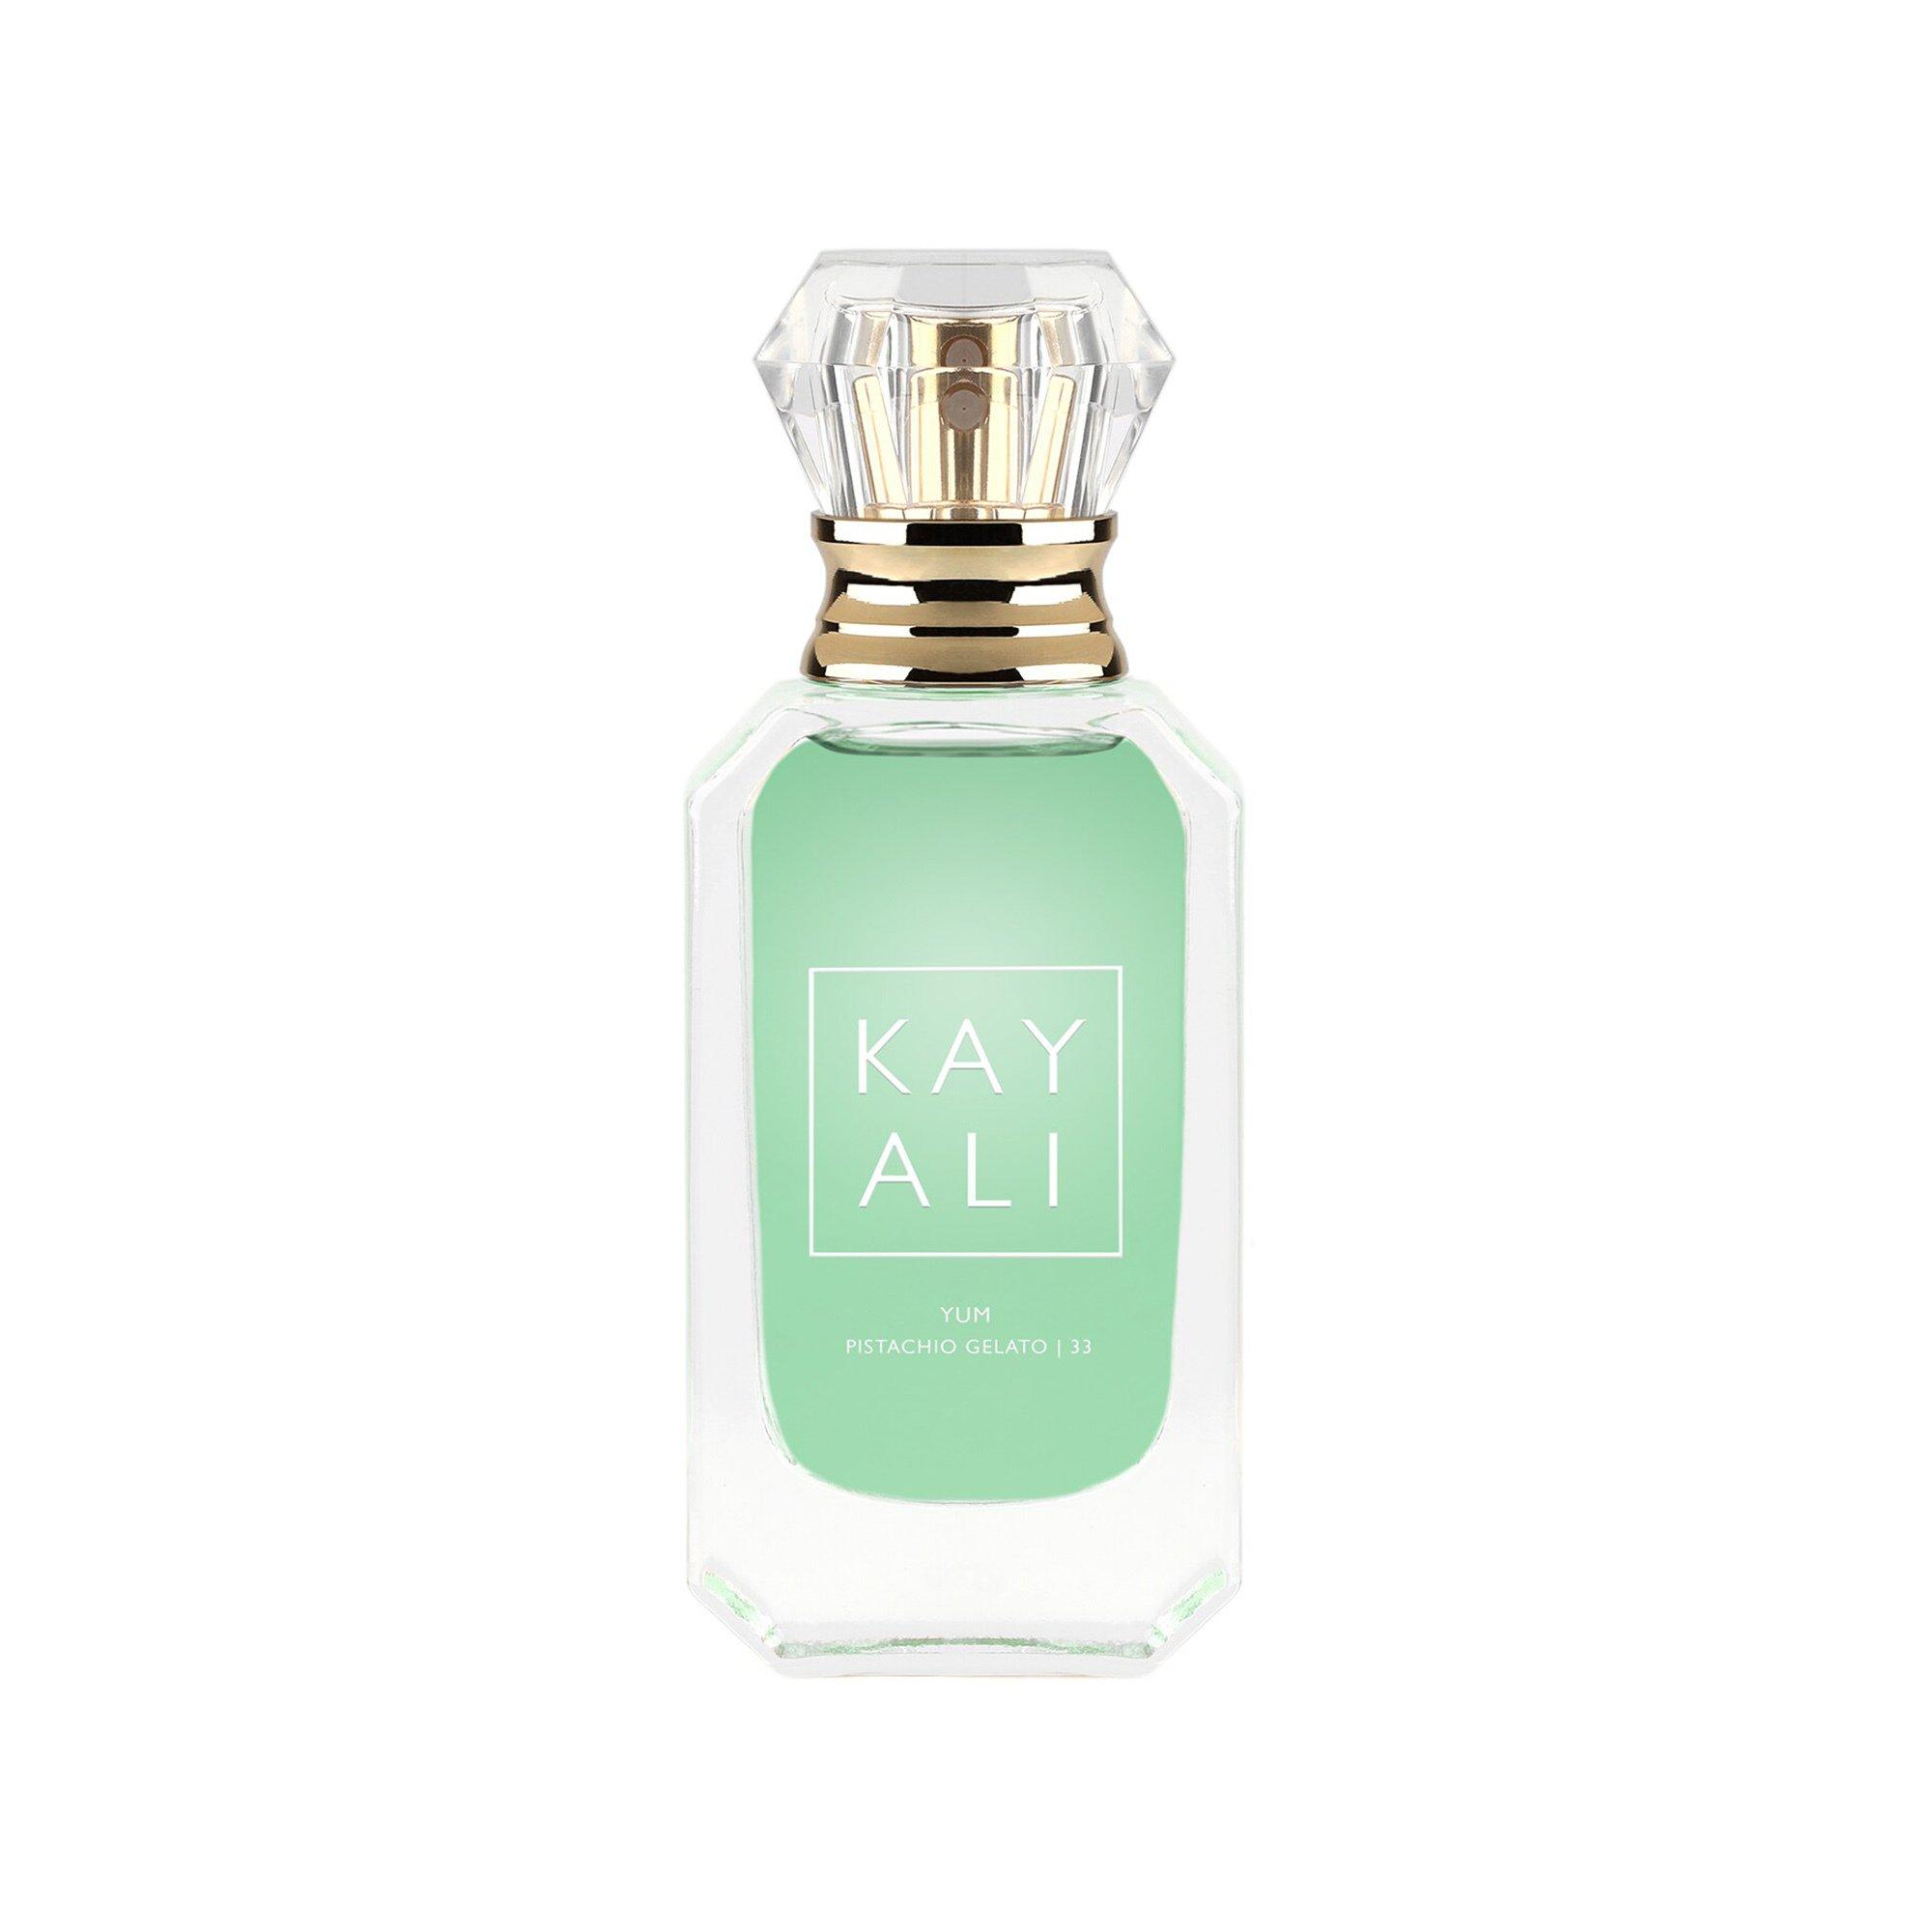 Kayali Yum Pistachio Gelato | 33 - Eau de Parfum Intense